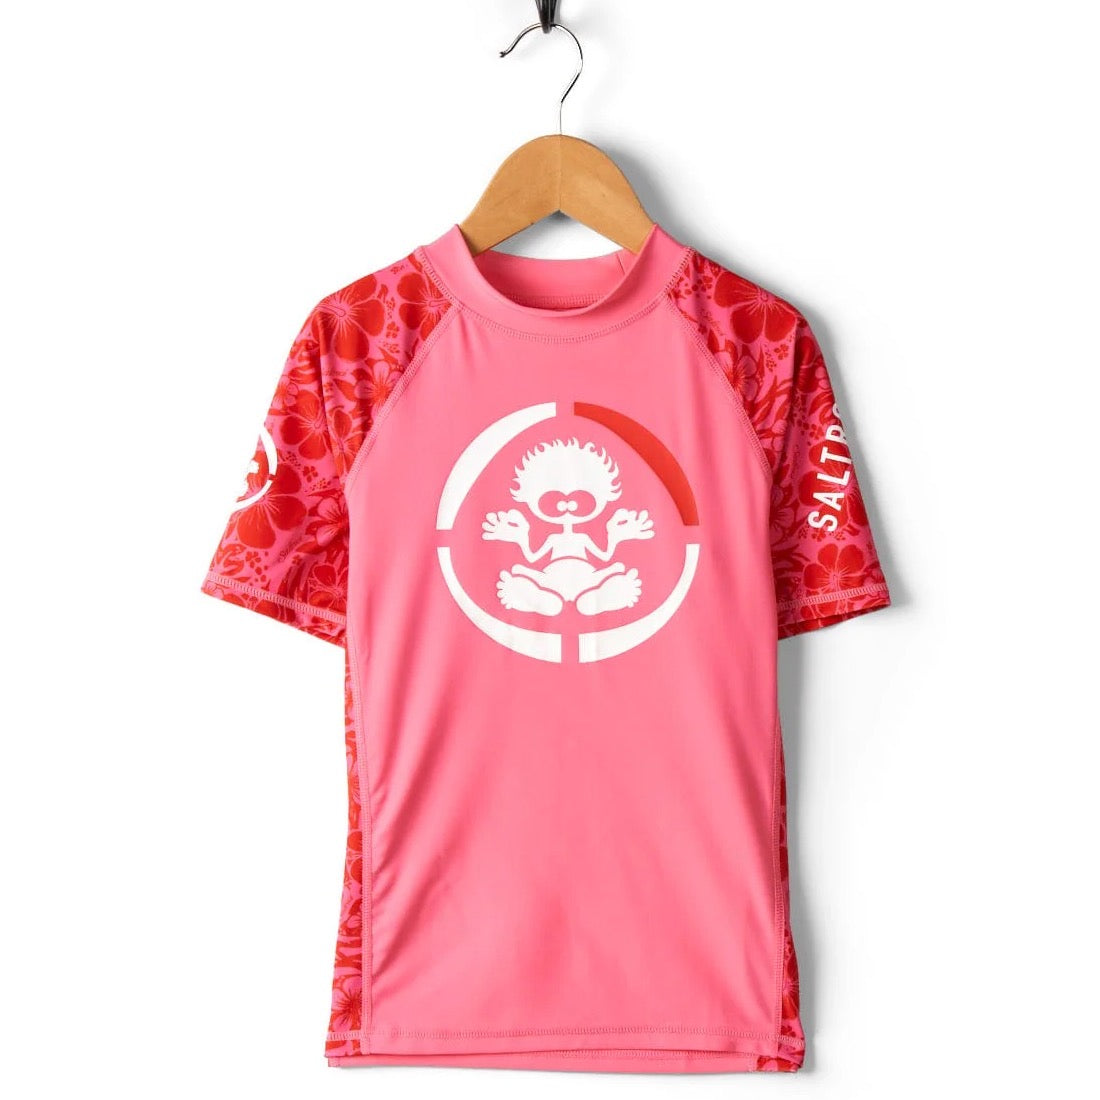 Saltrock Girls Hibiscus Rash Vest Clothing 7/8YRS / Pink,9/10YRS / Pink,11/12YRS / Pink,13YRS / Pink